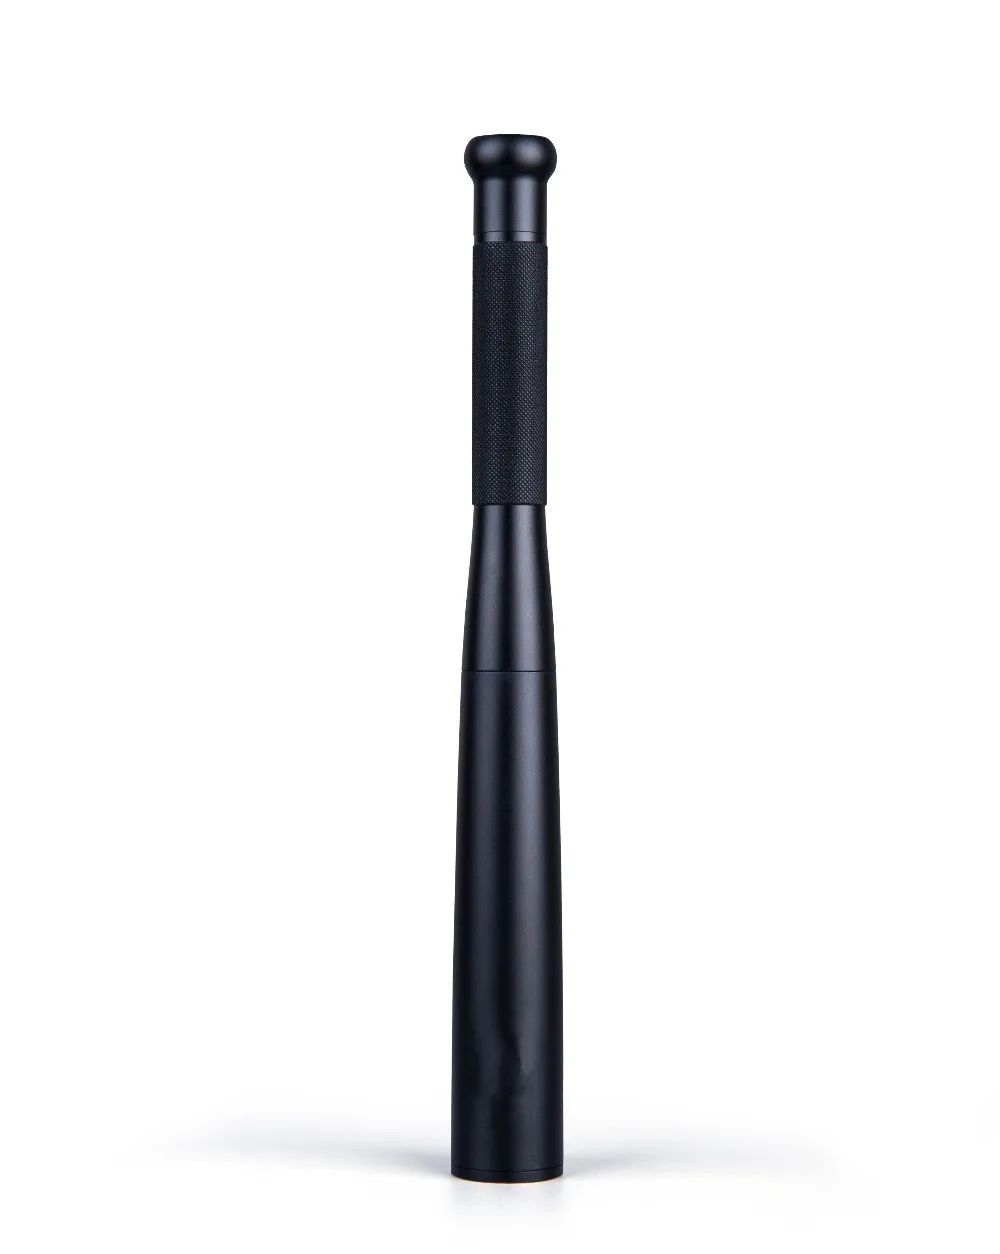 New 3 Modes Baseball Bat LED Flashlight Outdoors Camping Security Rescue Light Torch Self Defense Emergency | Лампы и освещение